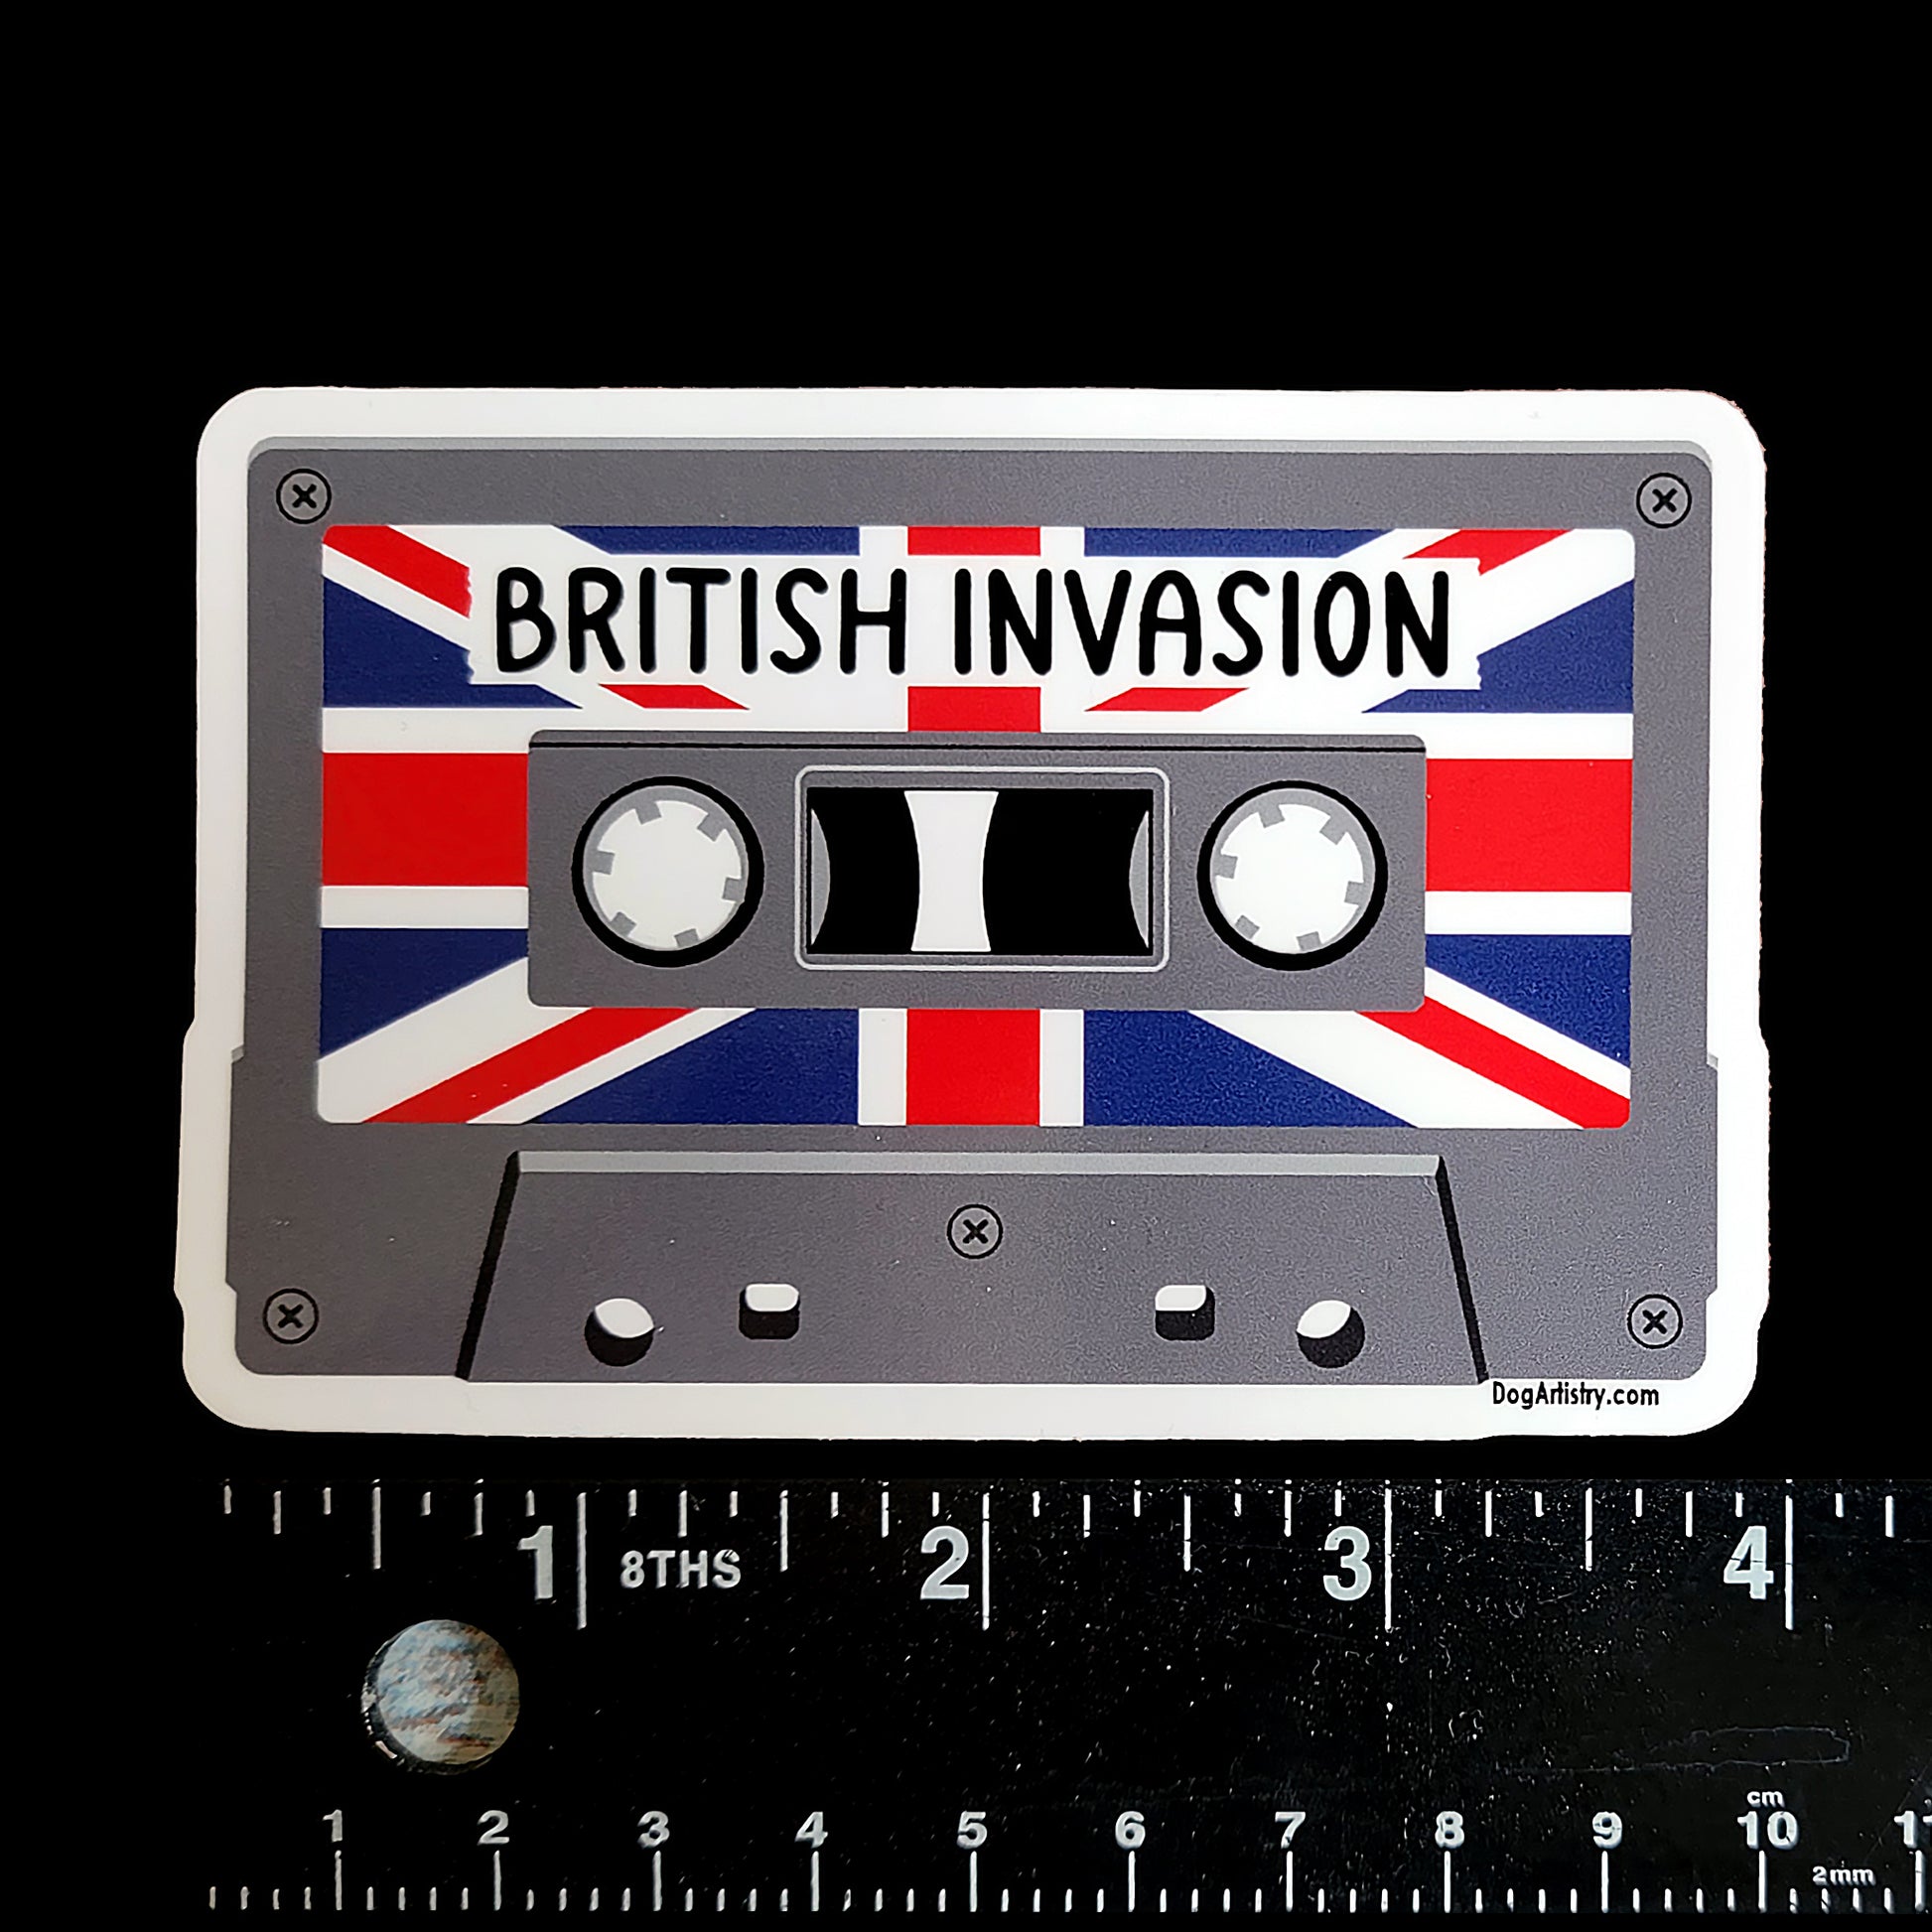 British Invasion cassette tape die-cut vinyl sticker with Union Jack flag by Dog Artistry.